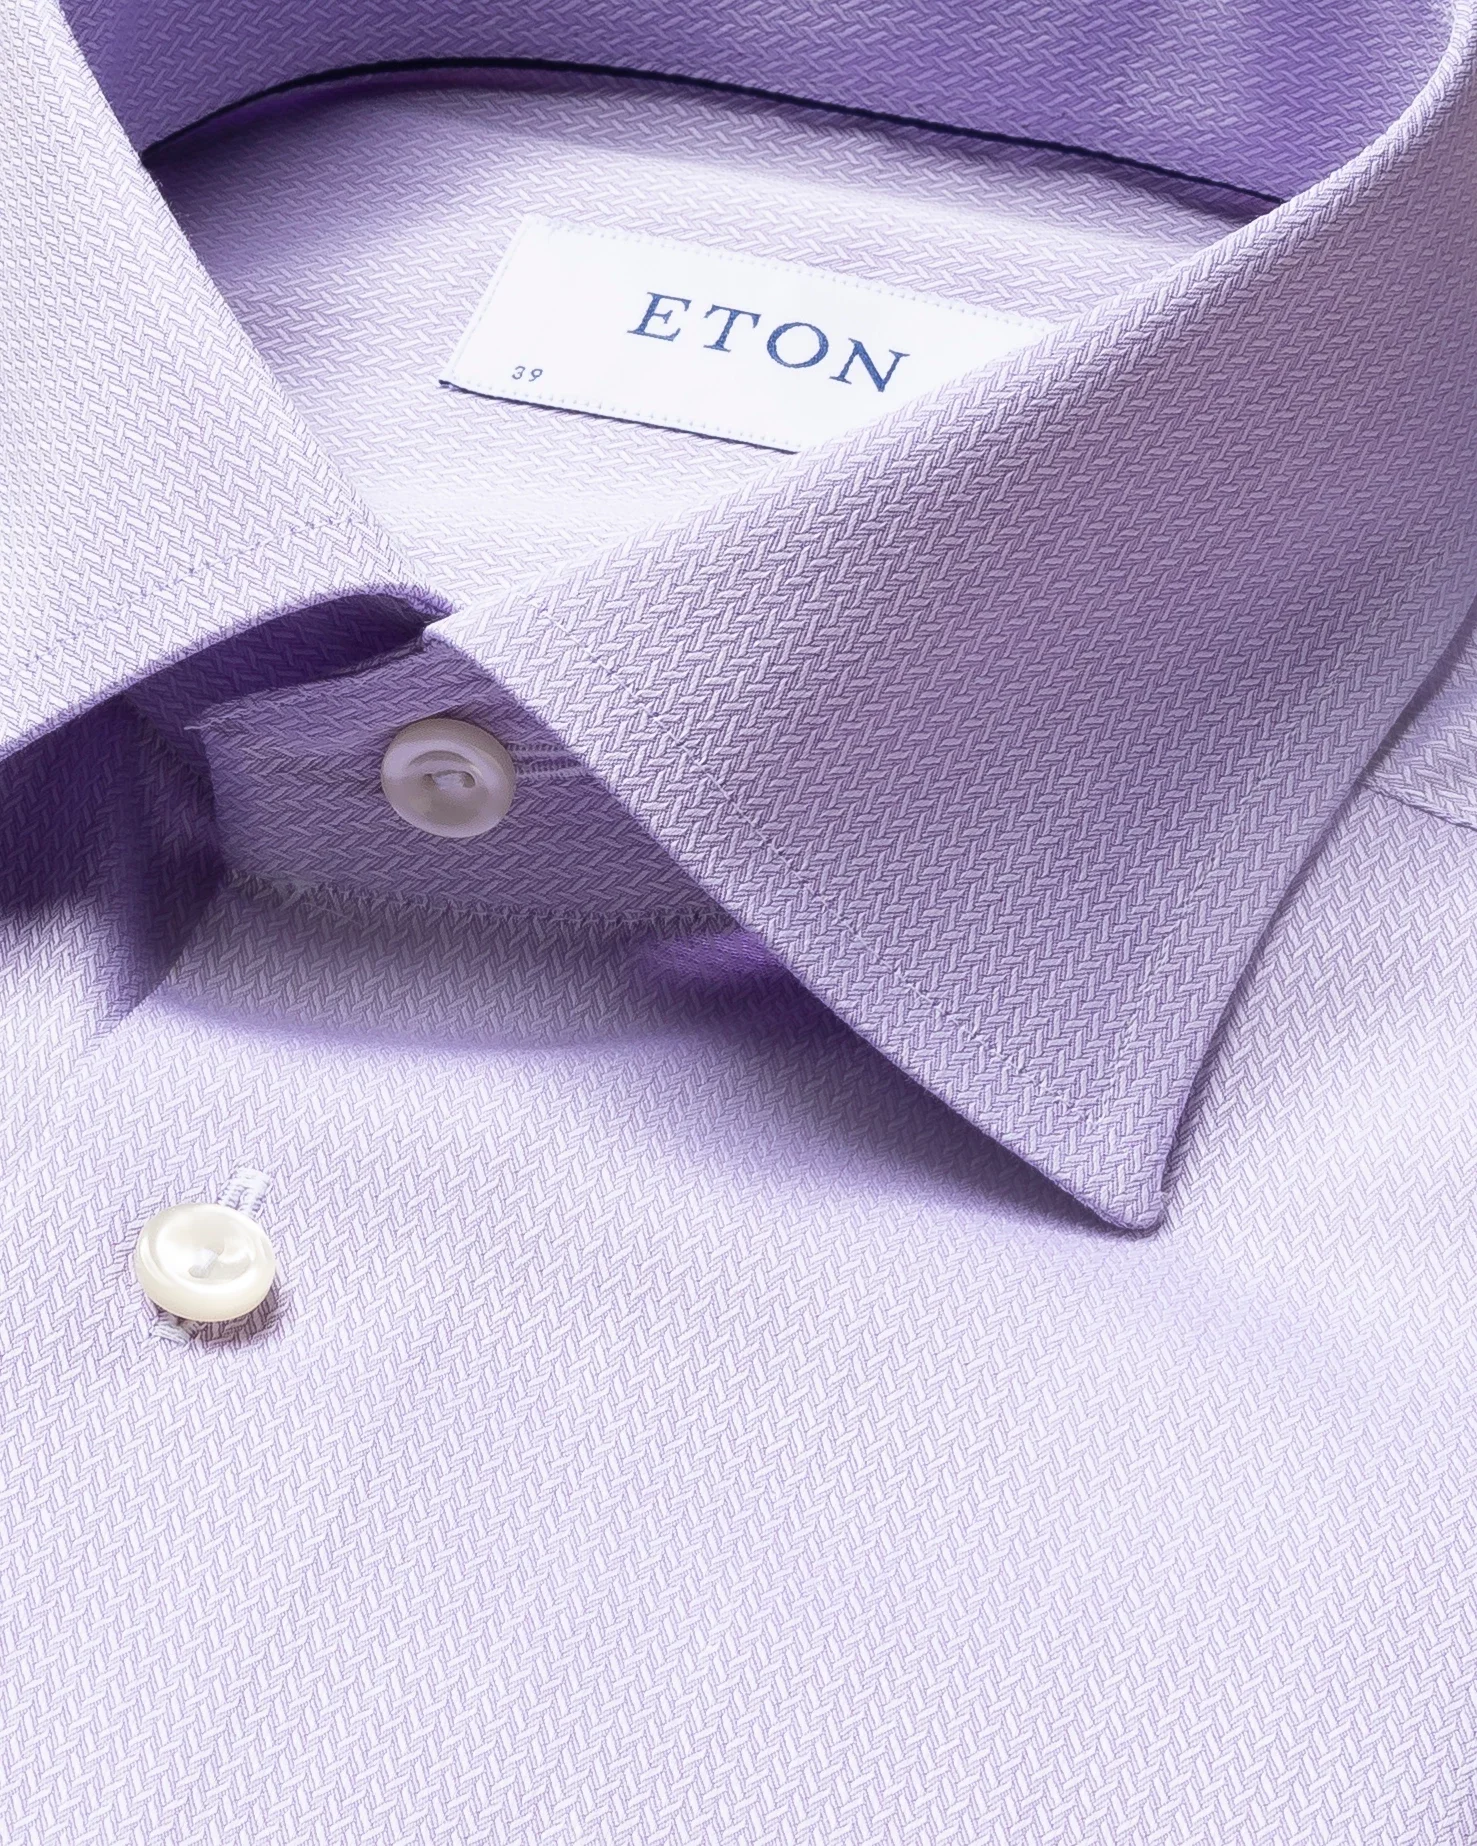 Eton - purple micro braid shirt